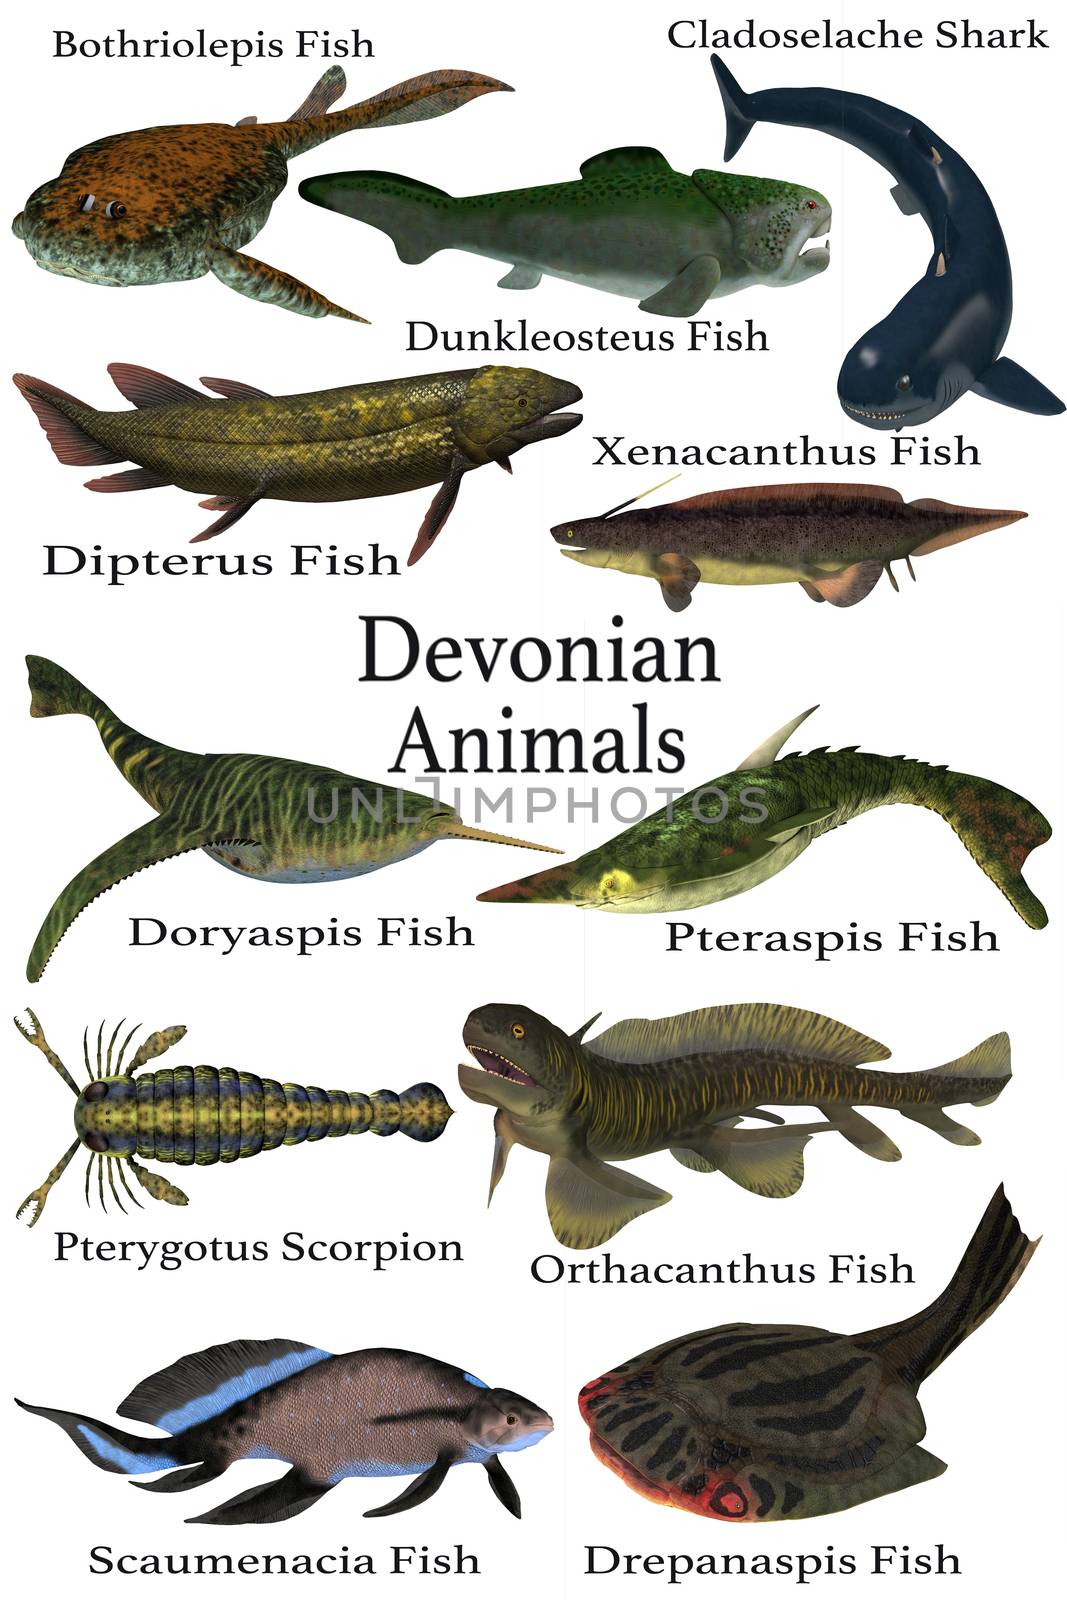 Devonian Animals by Catmando